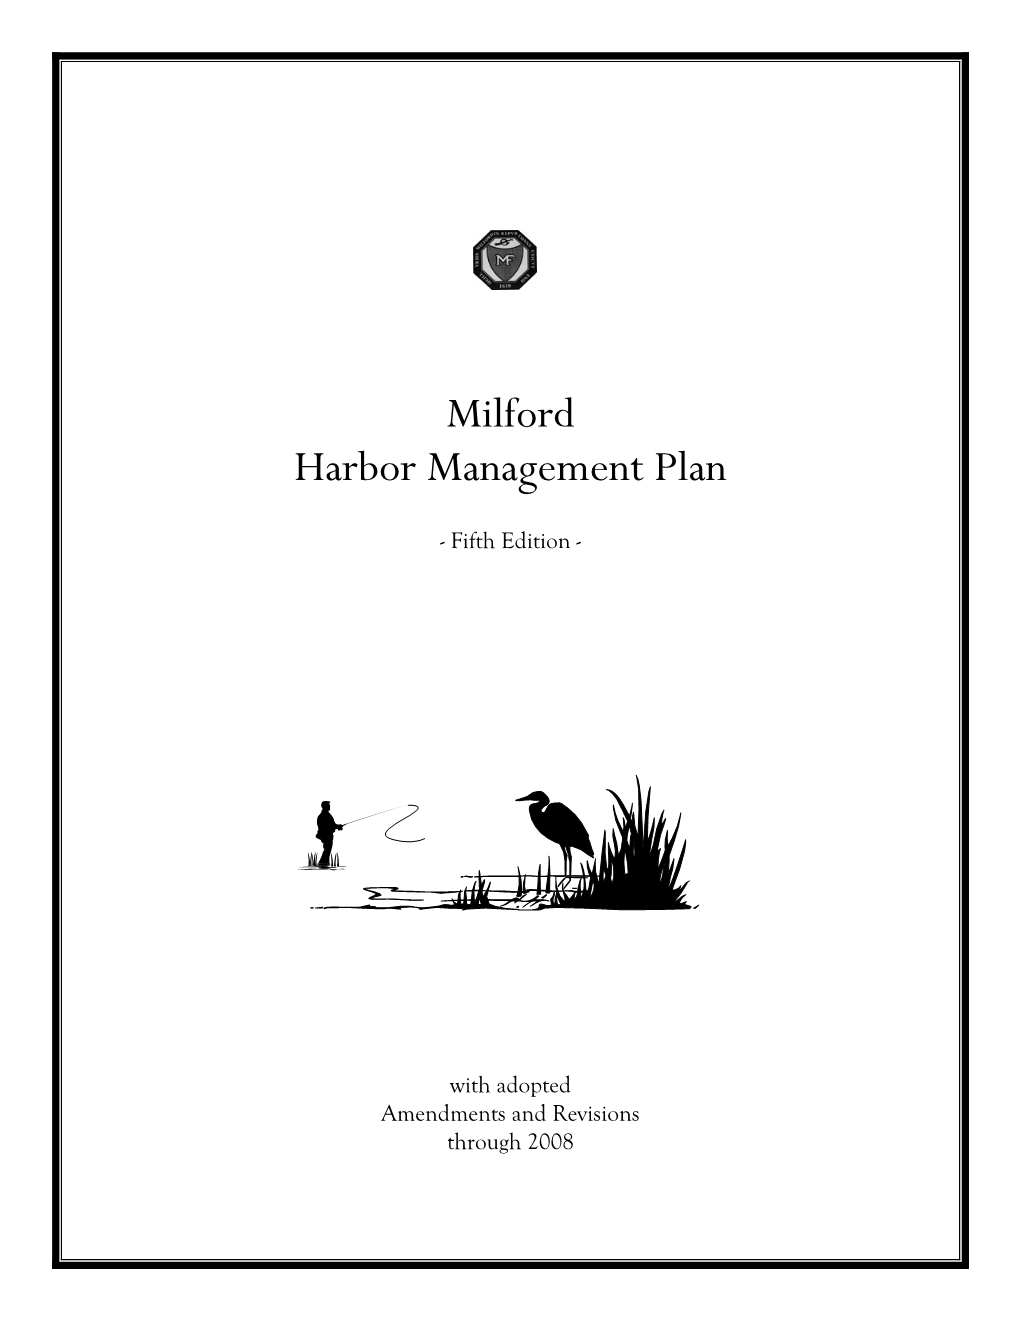 Milford Harbor Management Plan